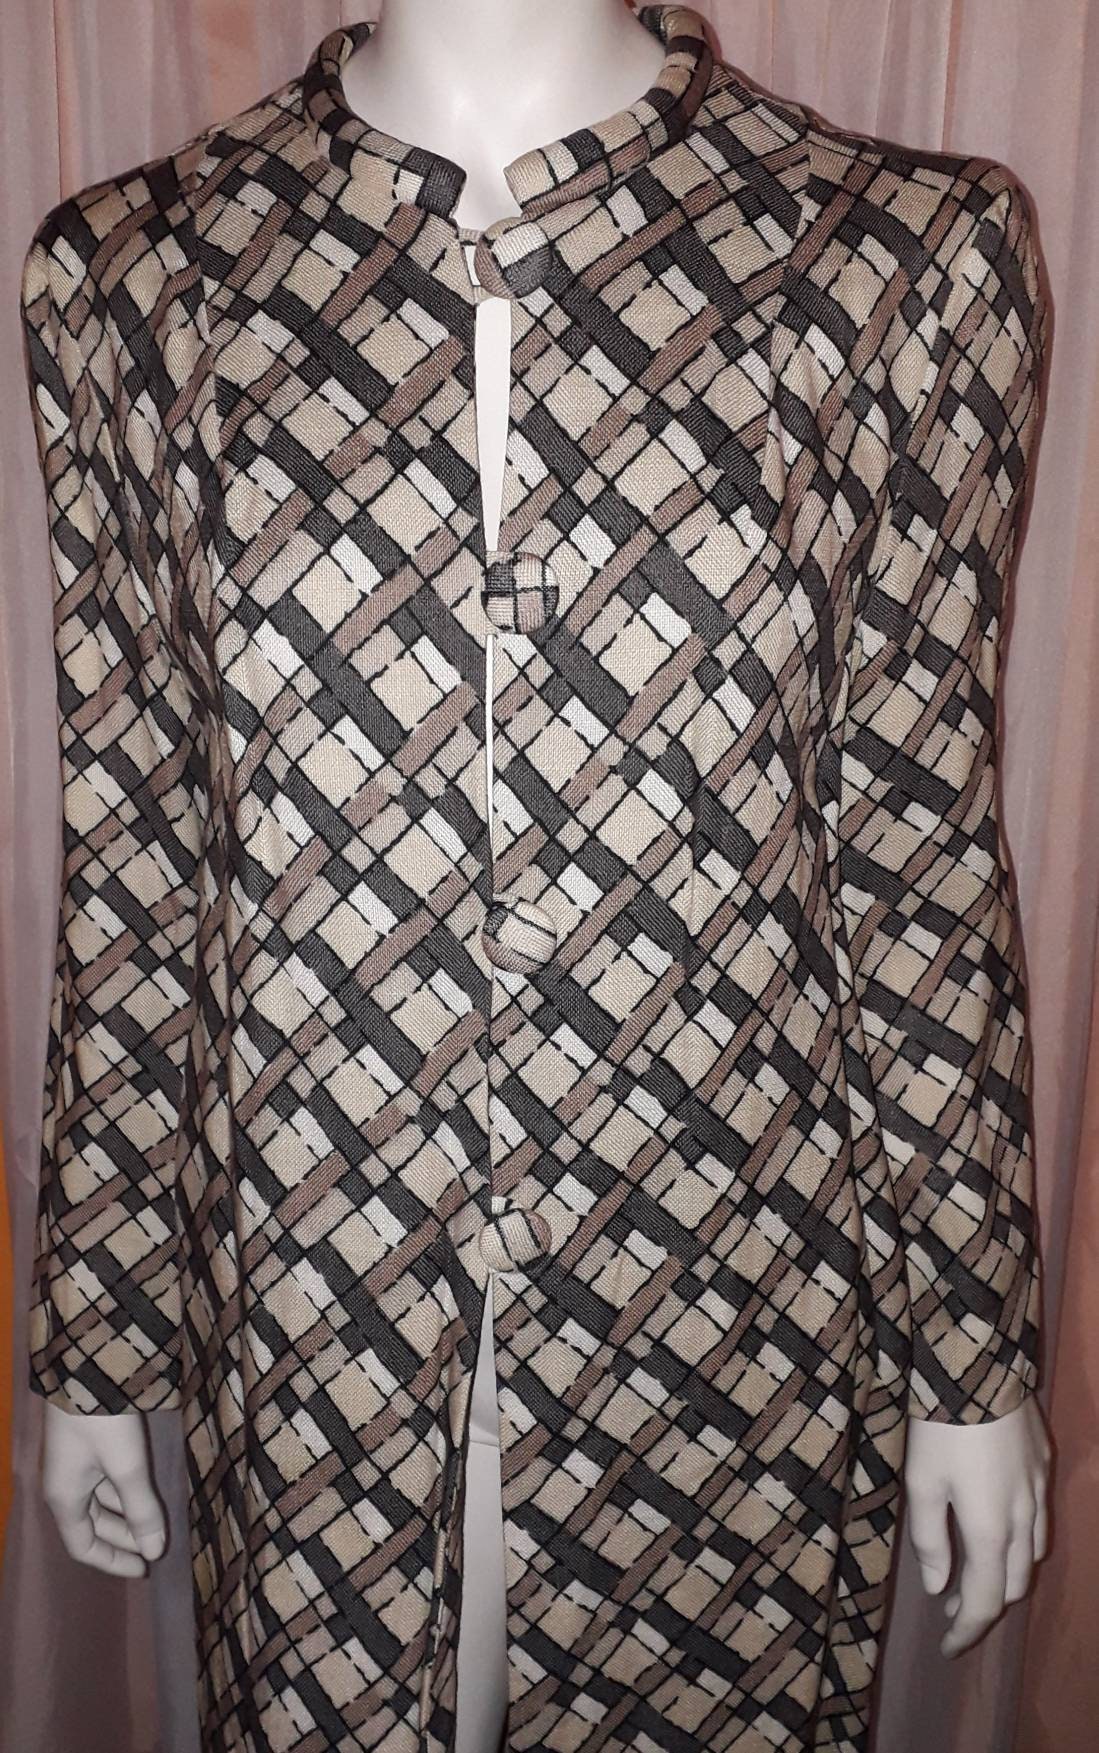 SALE Vintage 1960s Coat Lightweight Abstract Mod Geometric Print Coat Brown Beige Linen Blend Large Buttons Loops Boho M L